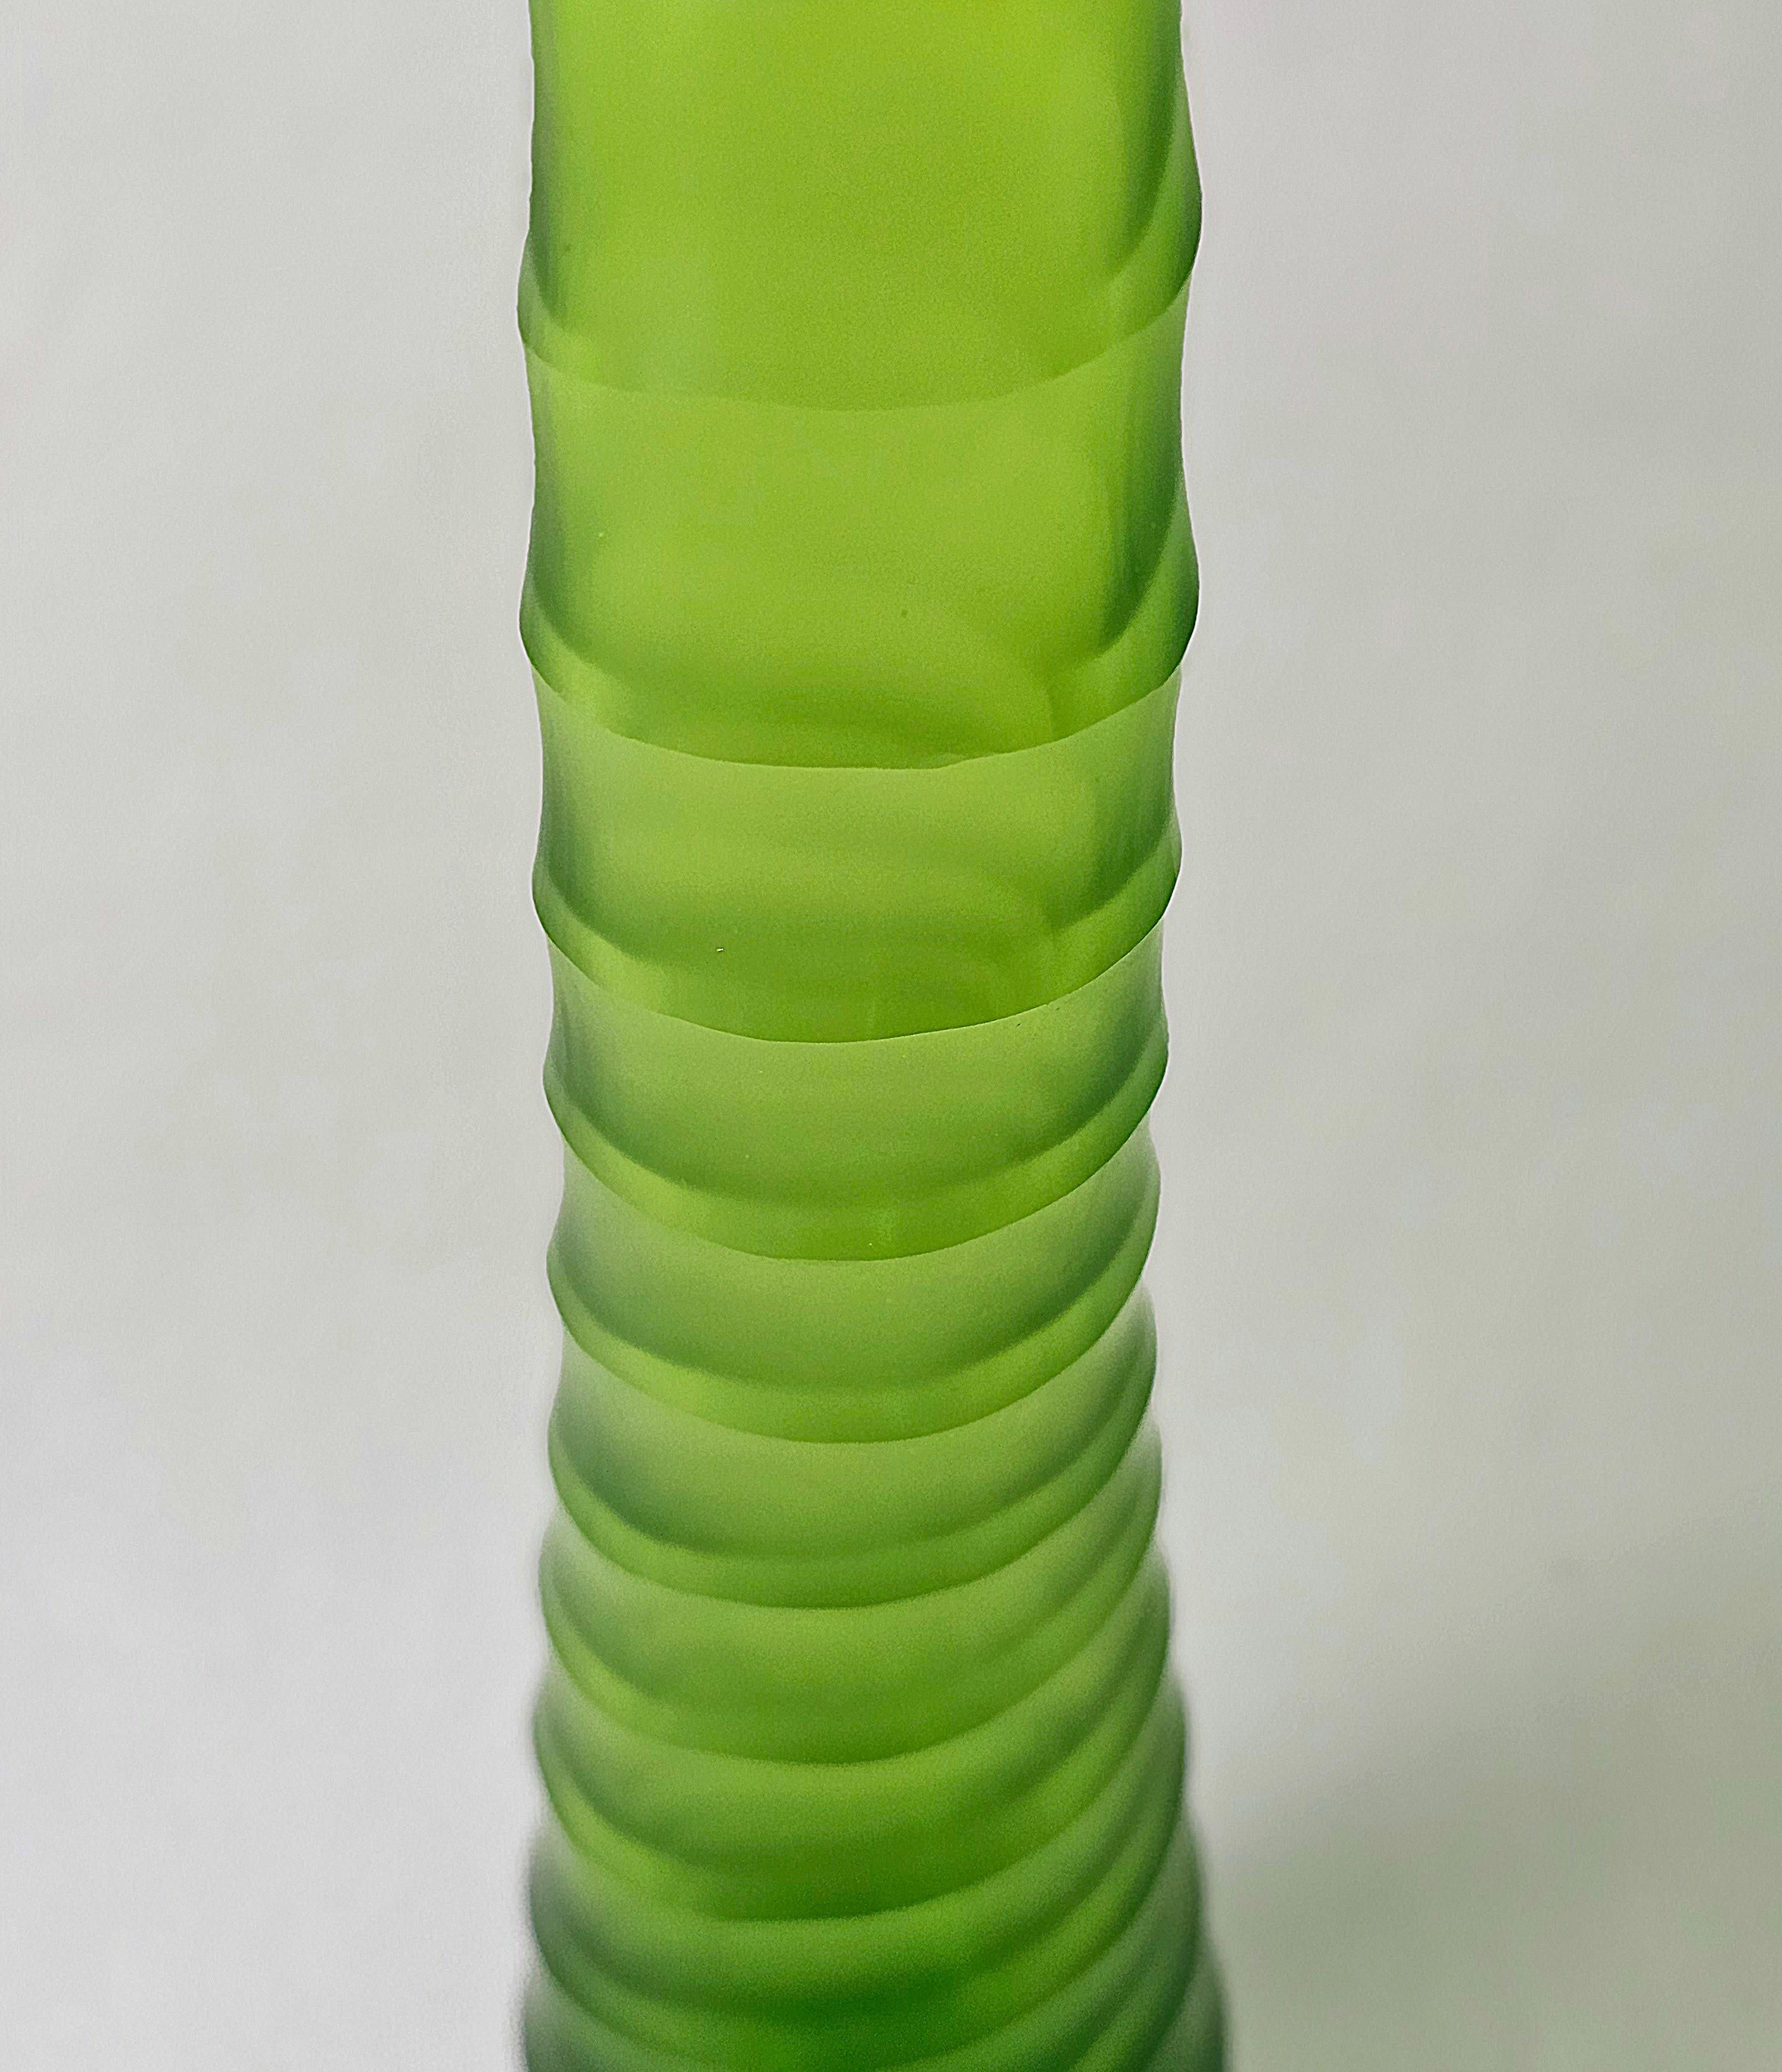 Vase Decorative Object Murano Glass Green Midcentury Modern Italian Design 1970s For Sale 5